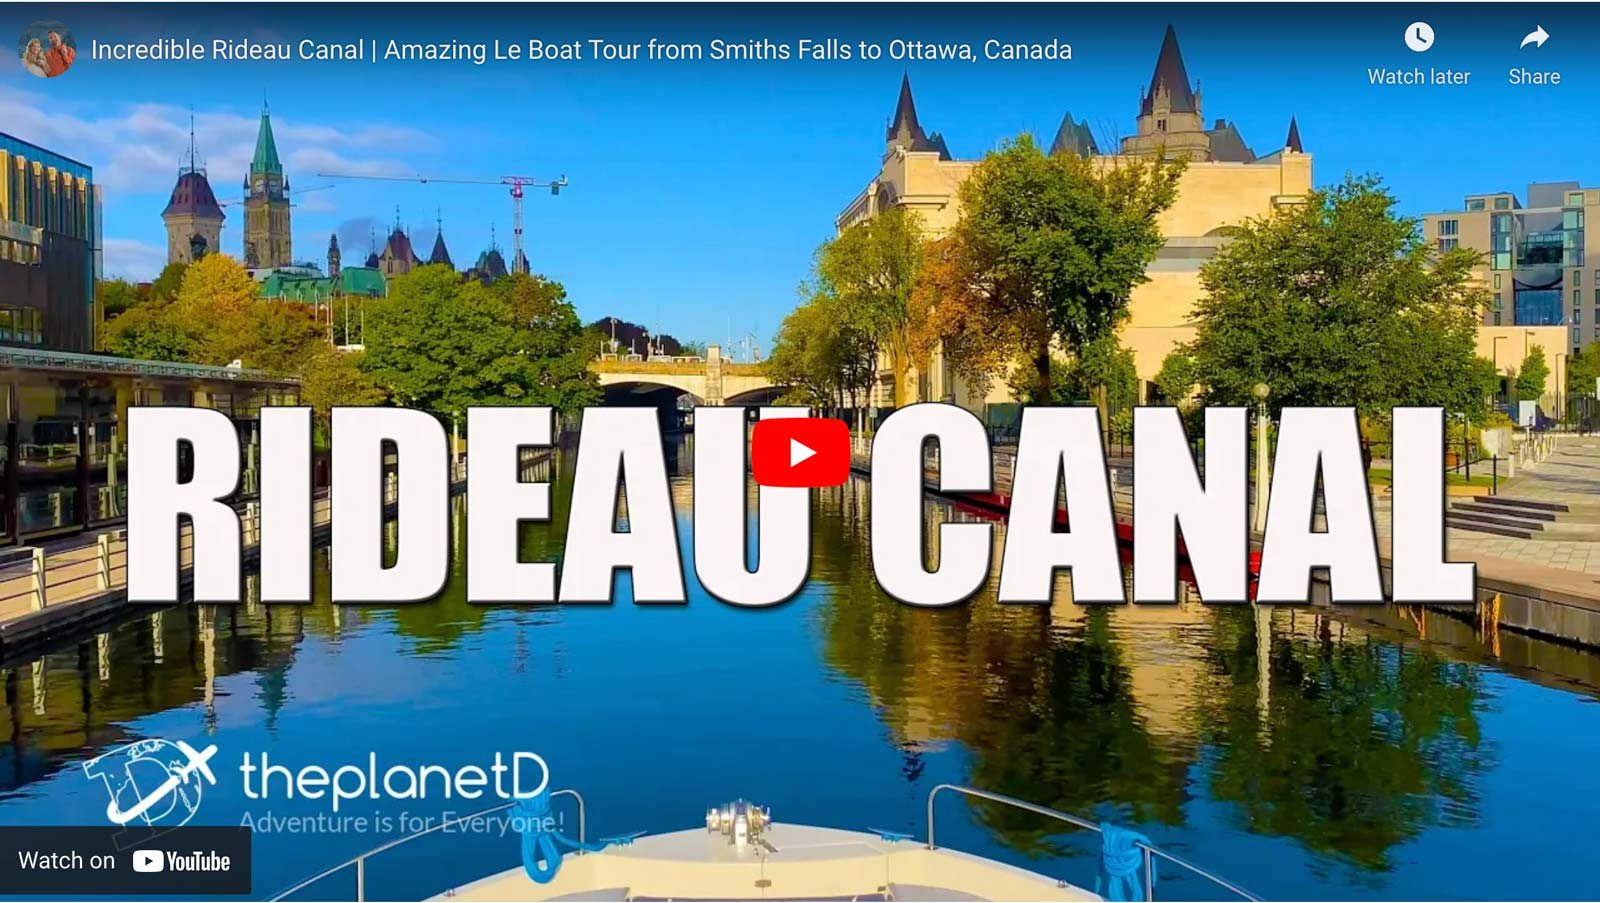 le boat canal cruise to Ottawa